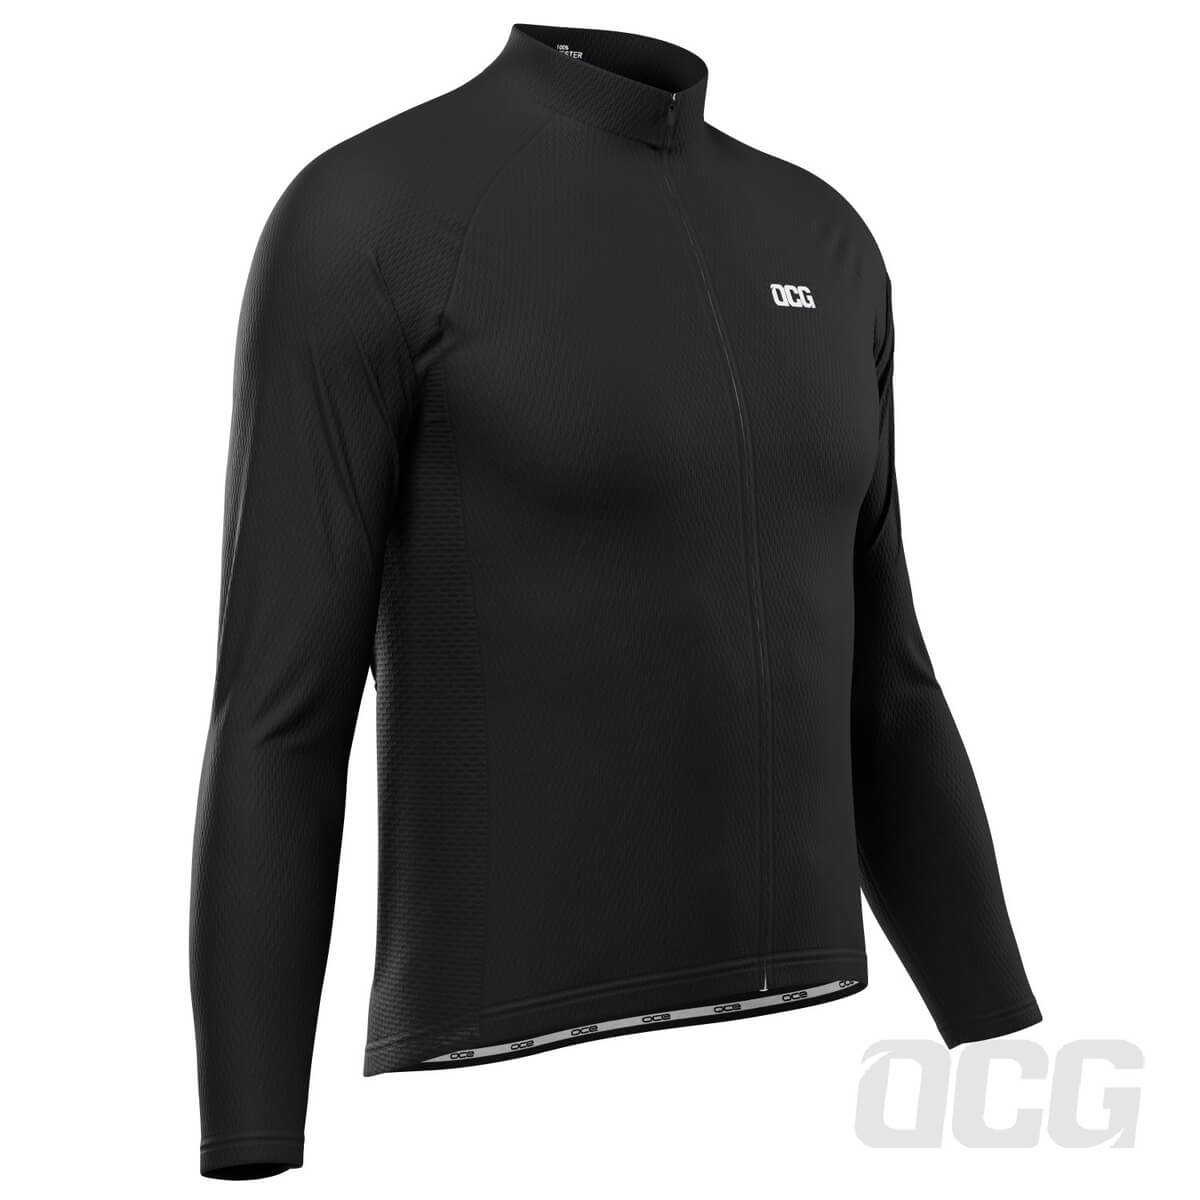 Men's OCG Basic Colors Long Sleeve Cycling Jersey